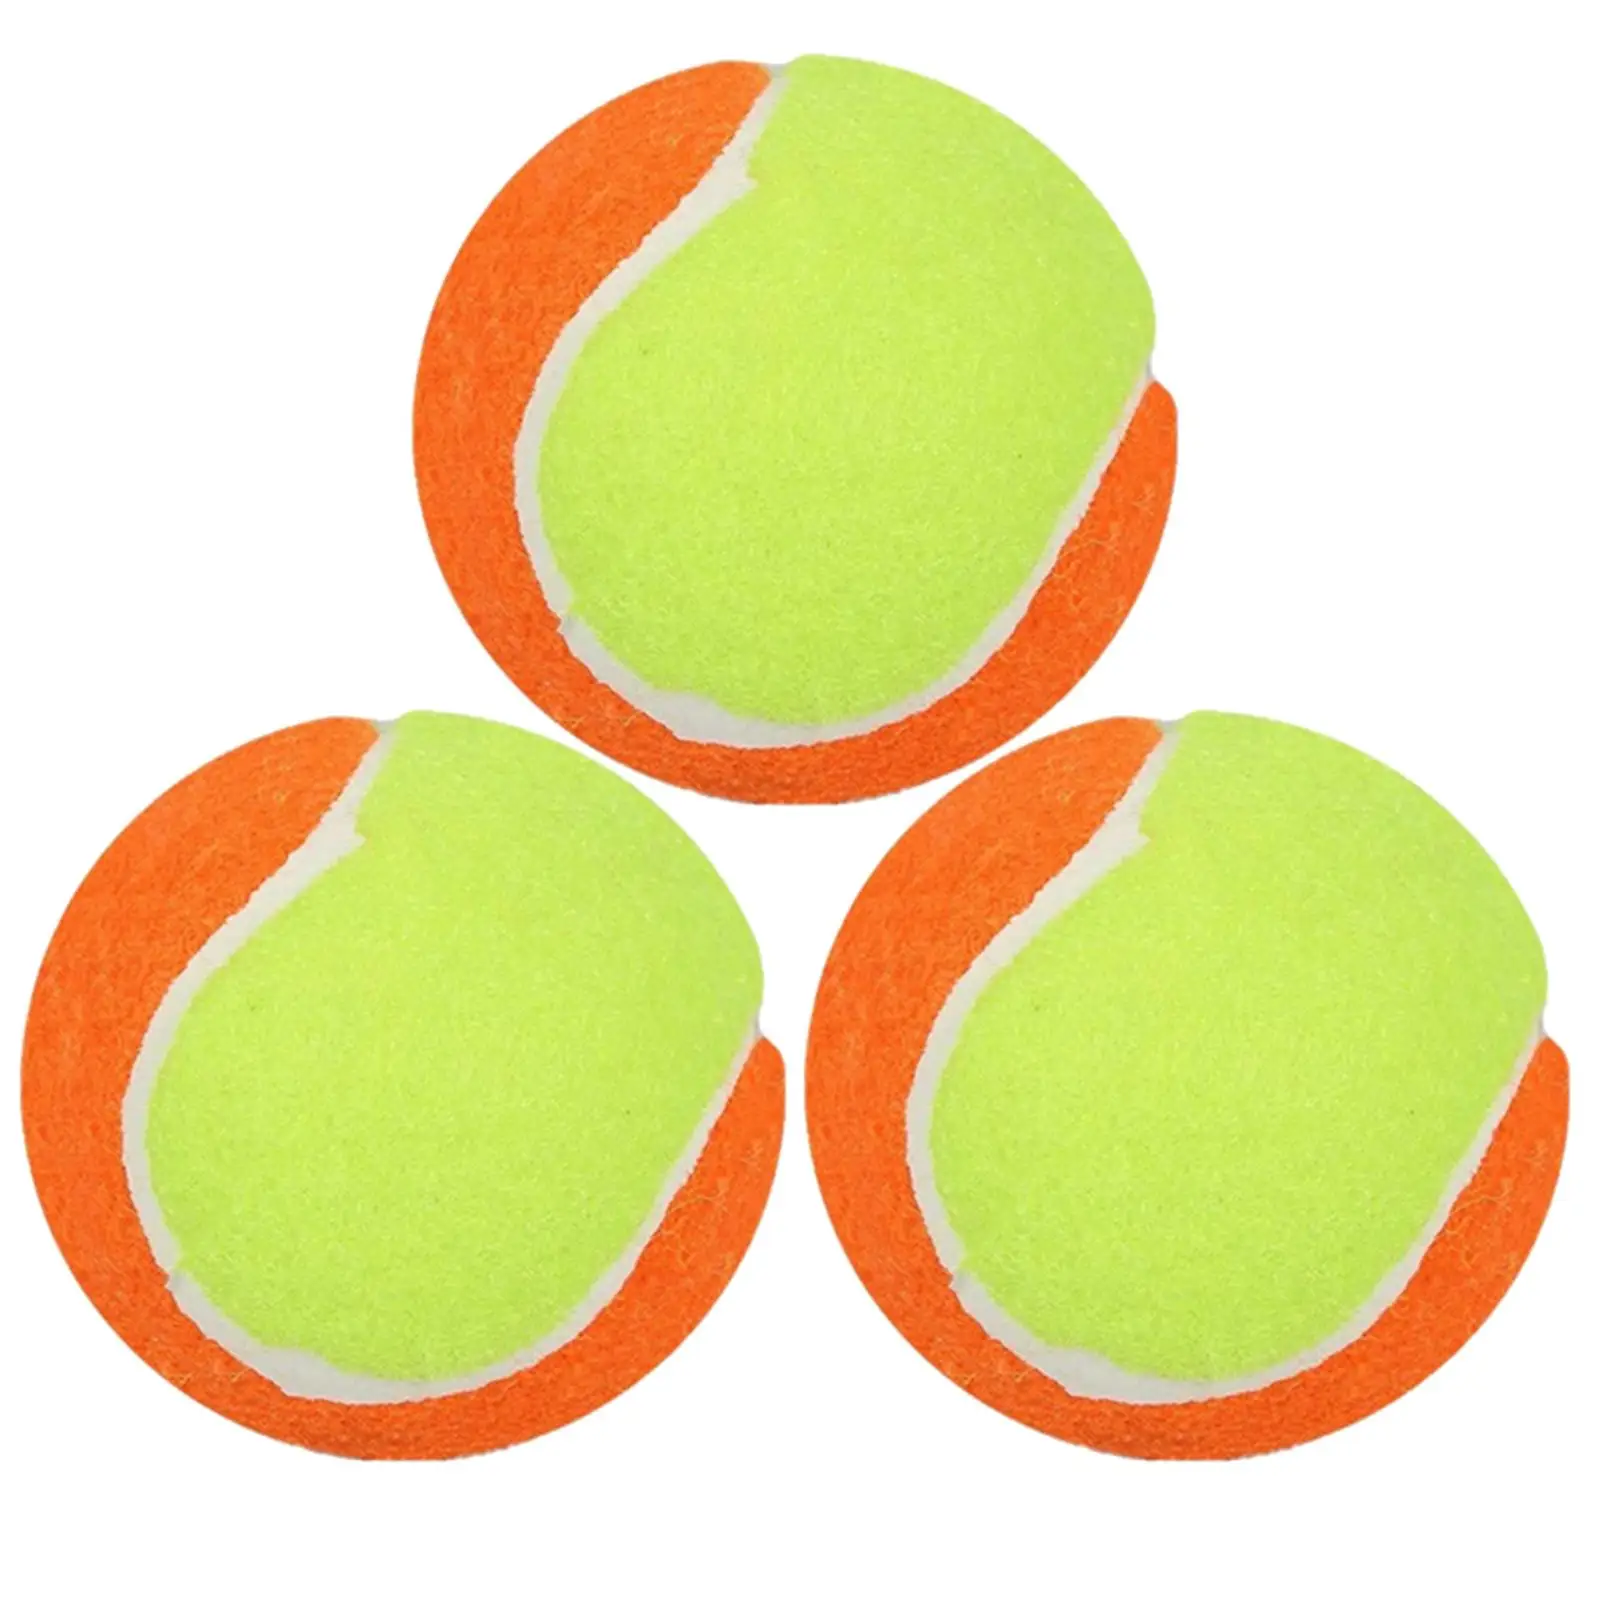 3x Training Tennis Balls Easily pinwheel Rubber Practice Tennis Training Tennis Balls for Outdoor Tour Adult Dogs